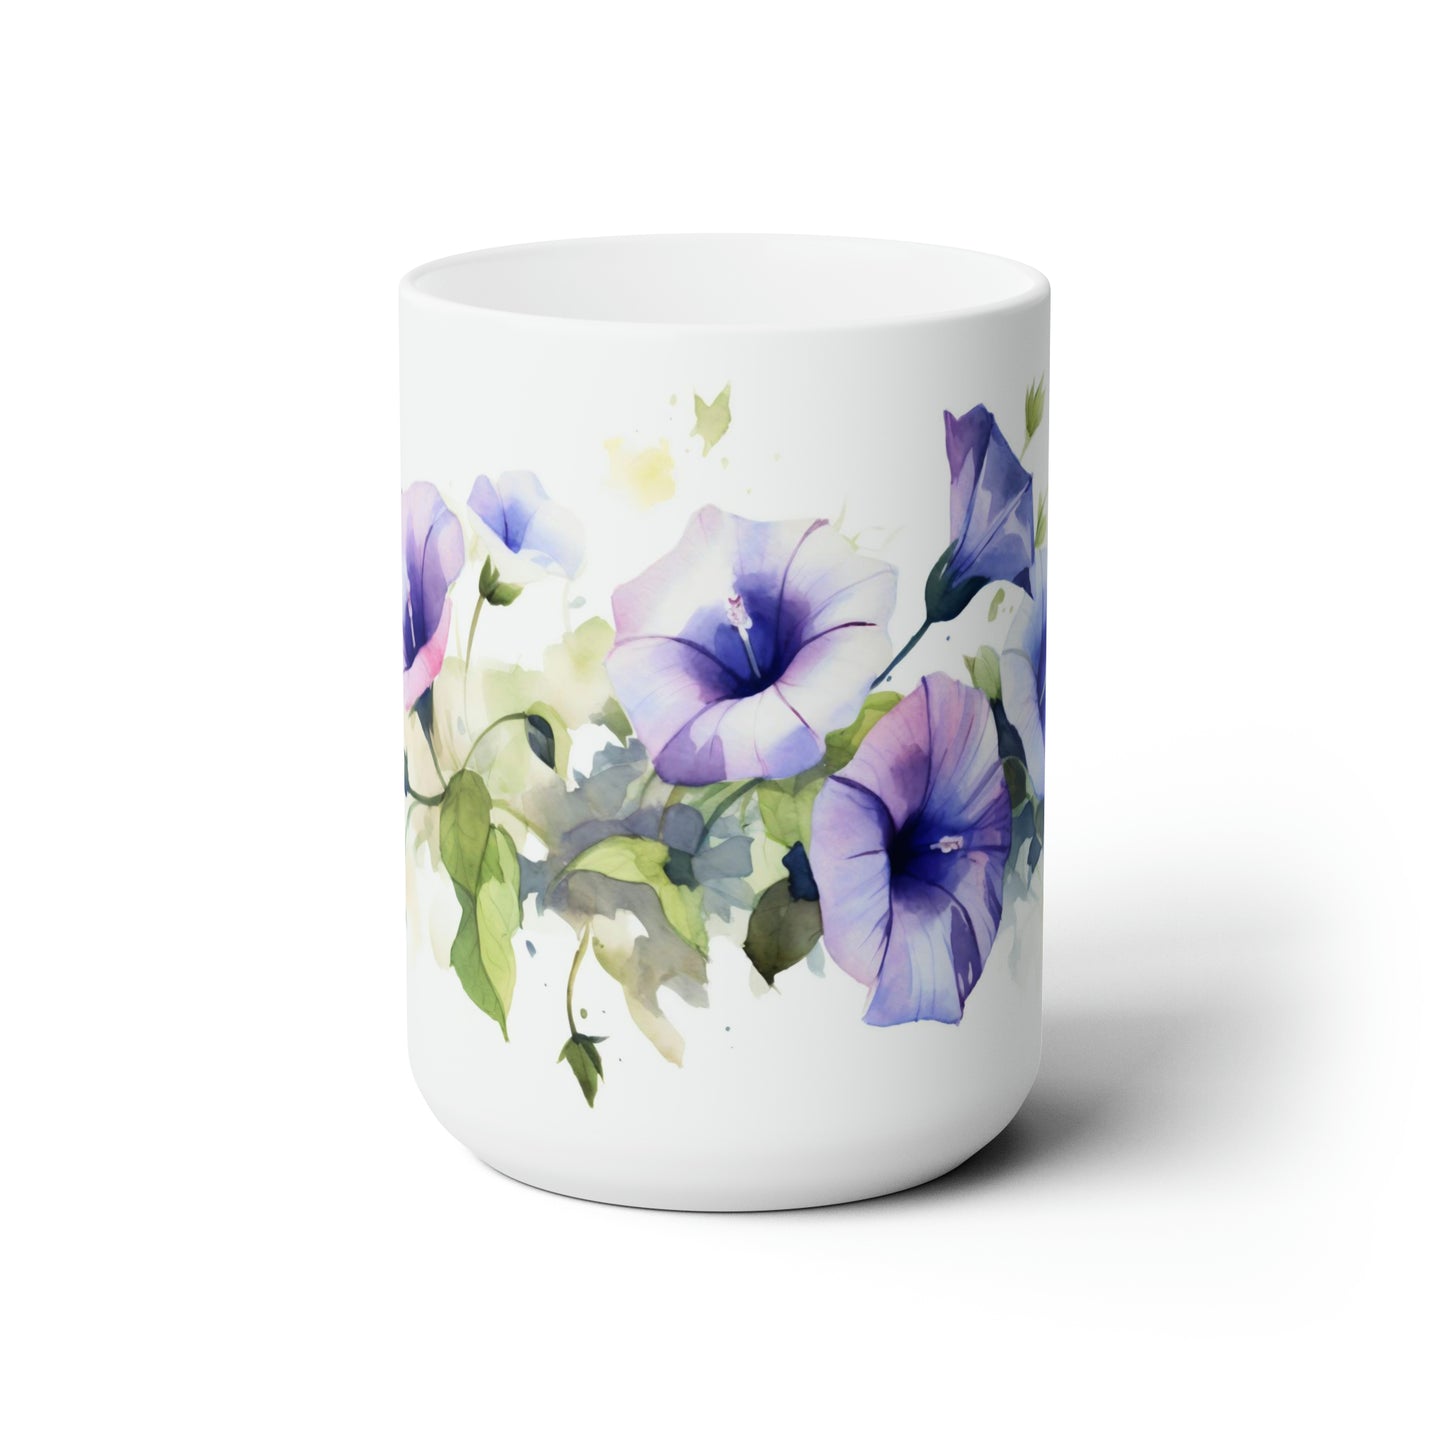 Morning Glory Ceramic Mug 15oz, Watercolor Flower Coffee Cup, Mother's Day Gift, Garden Lover Tea Mug